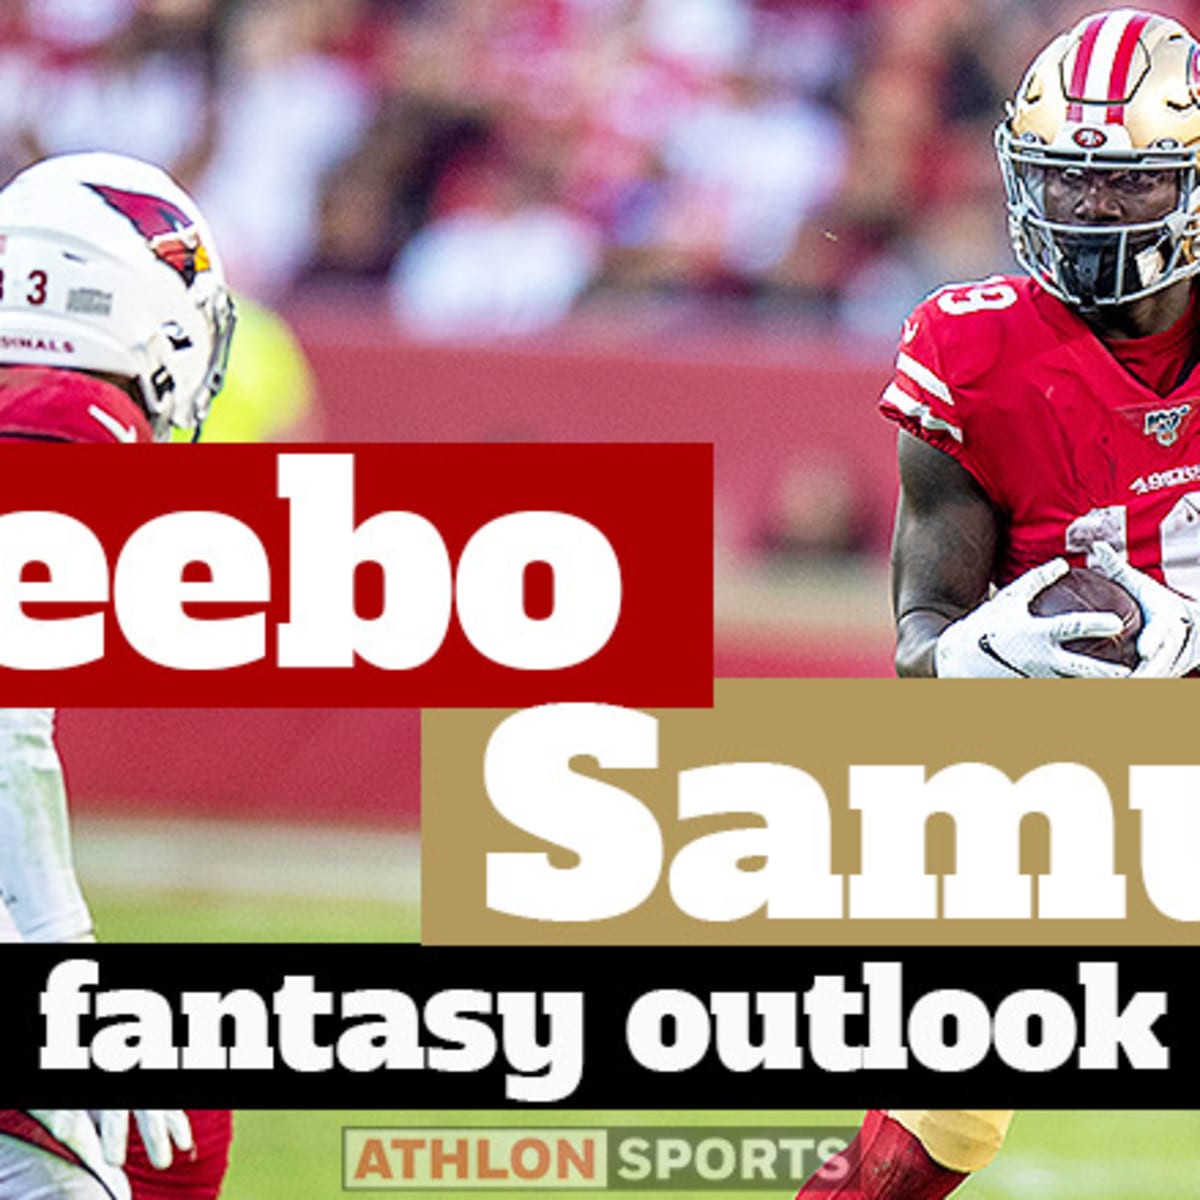 Deebo Samuel: Fantasy Outlook 2020 